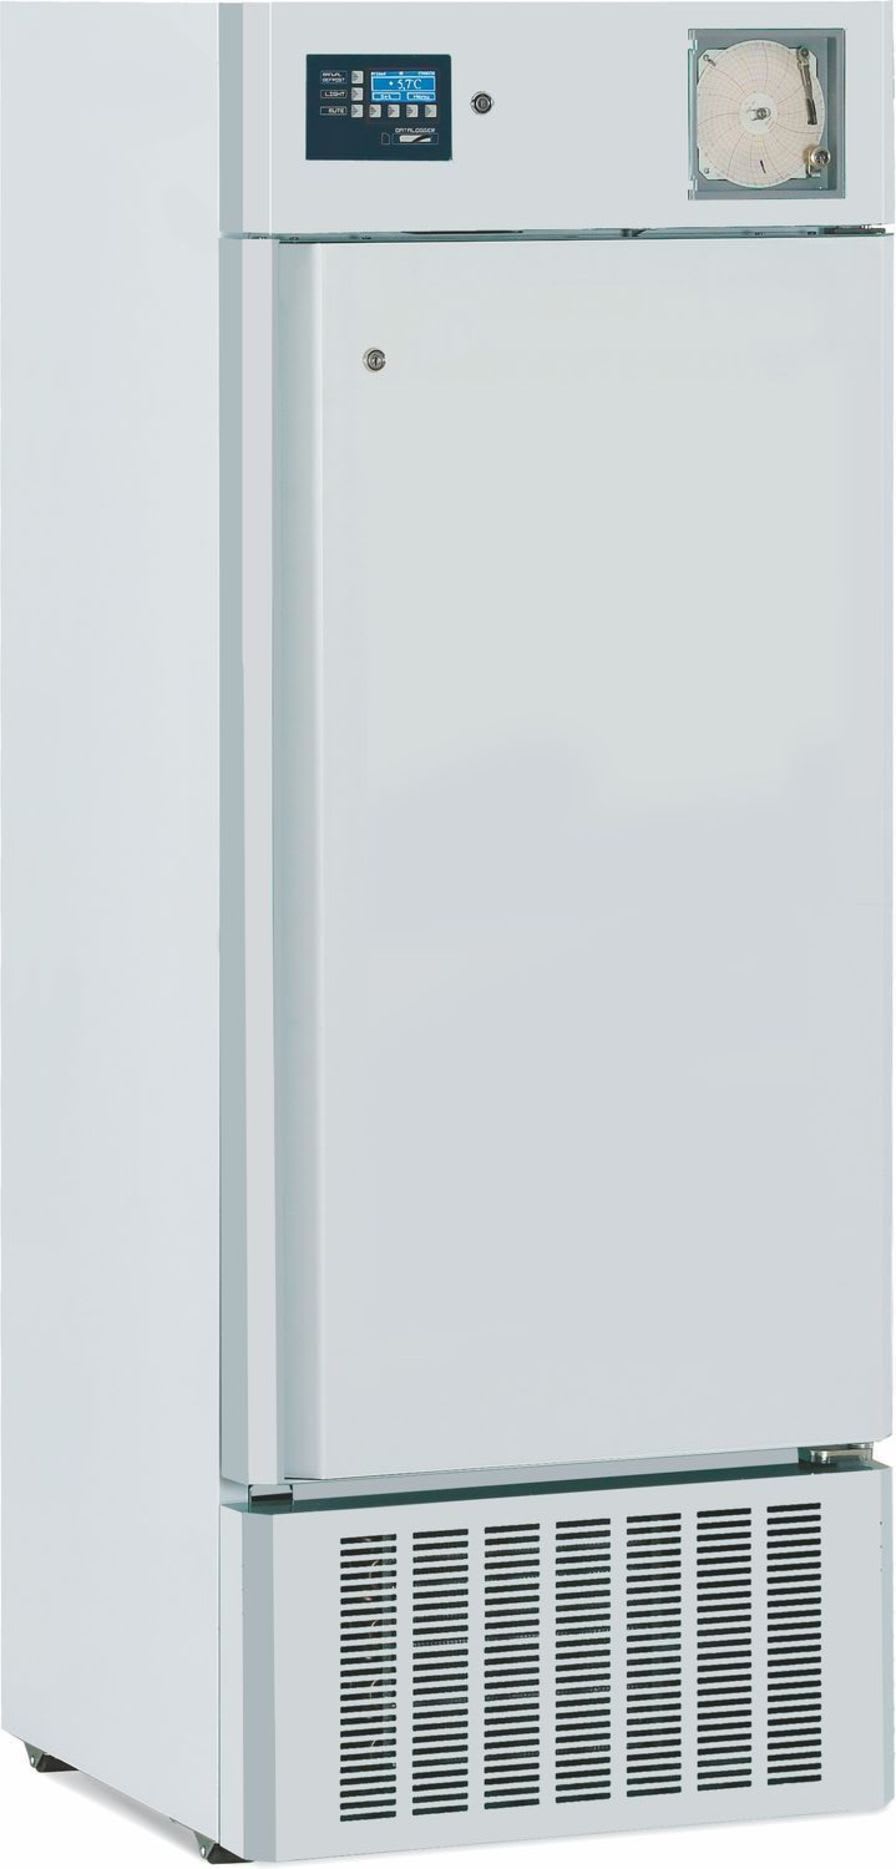 Laboratory freezer / cabinet / 1-door 200 L | DS-FS20 Desmon Spa